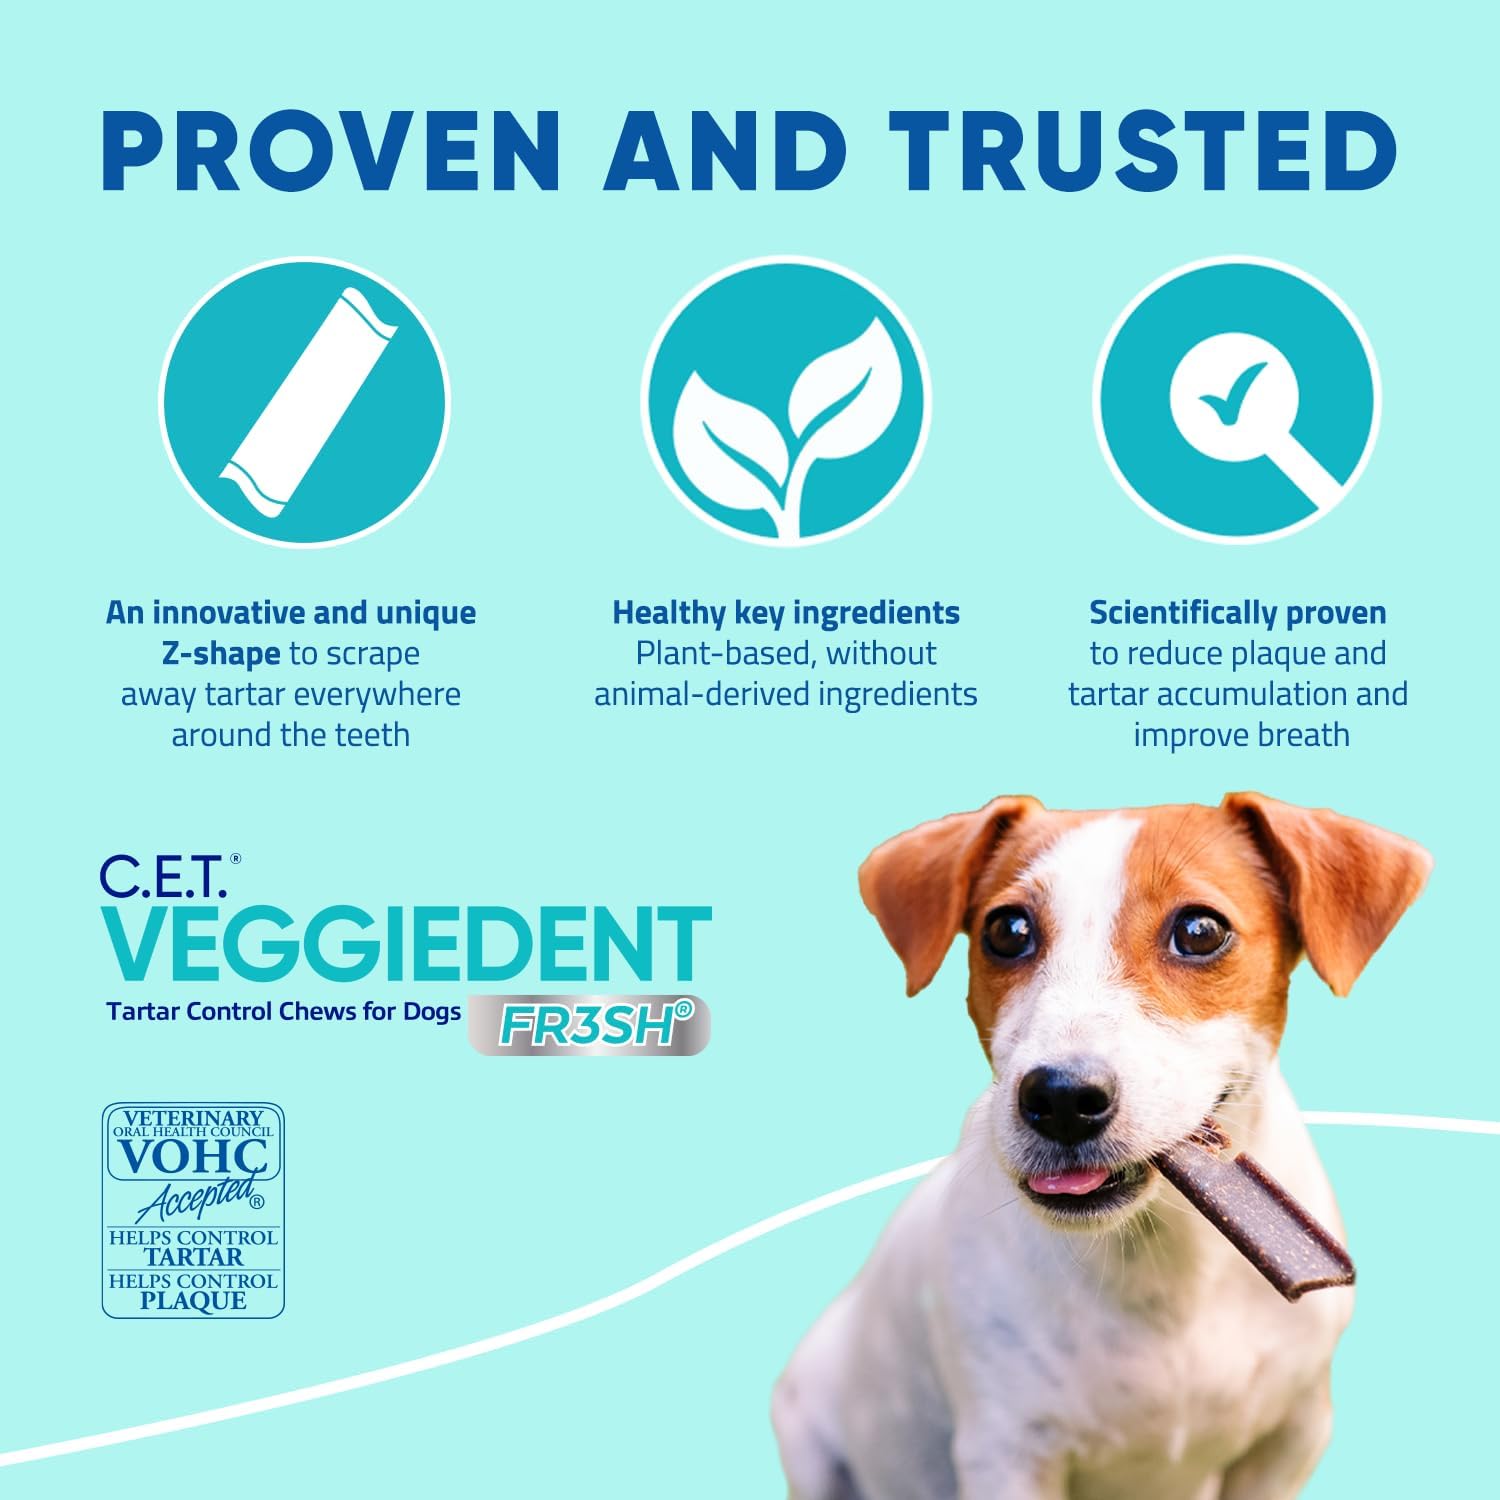 Virbac C.E.T. VEGGIEDENT FR3SH Tartar Control Chews for Dogs, Extra Small, 8 oz (Pack of 1) : Pet Supplies